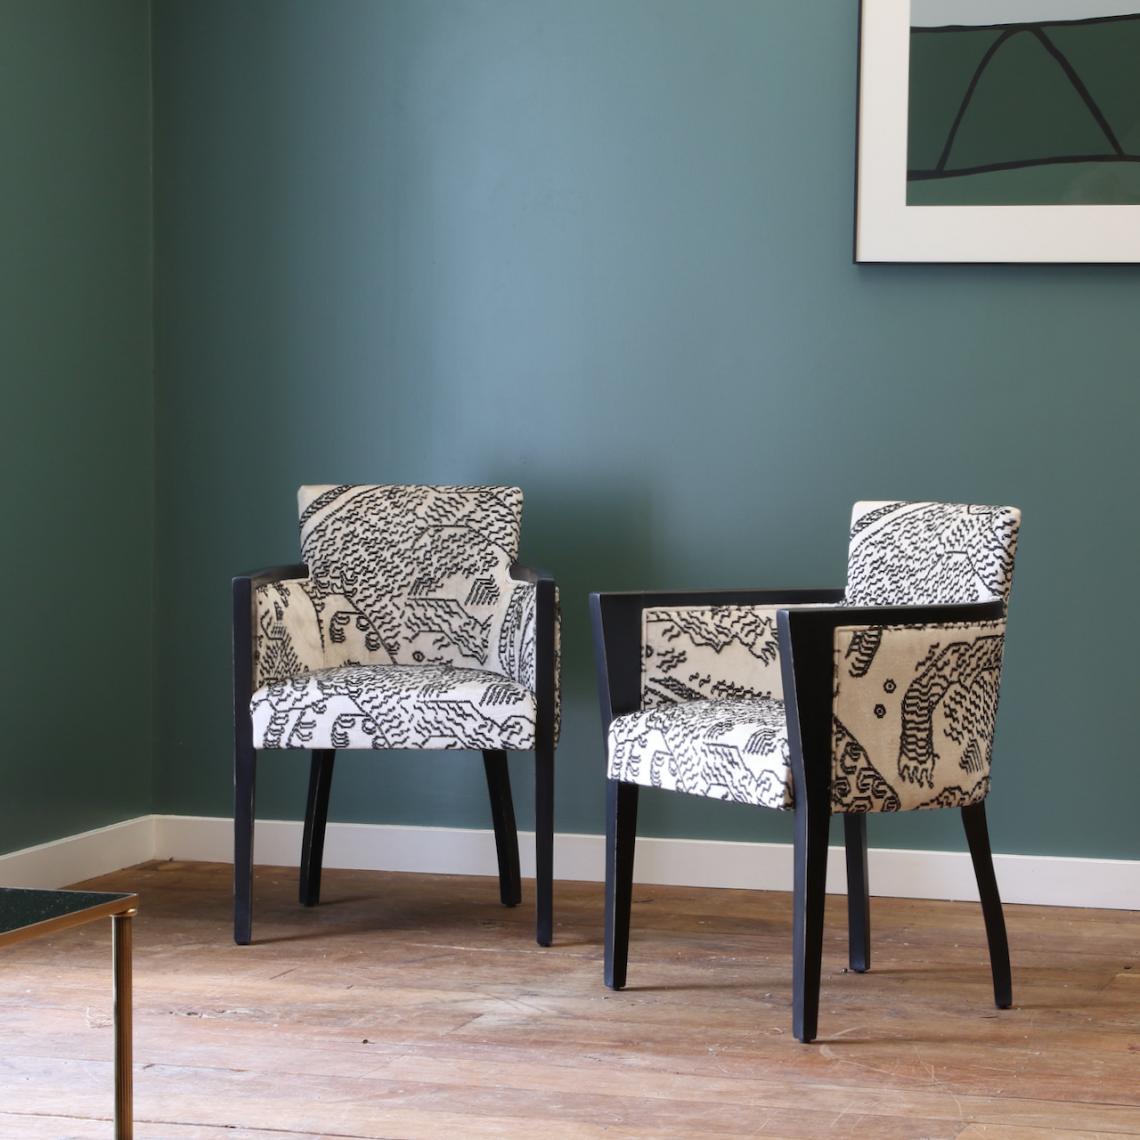 120-38 - Art Deco Chairs